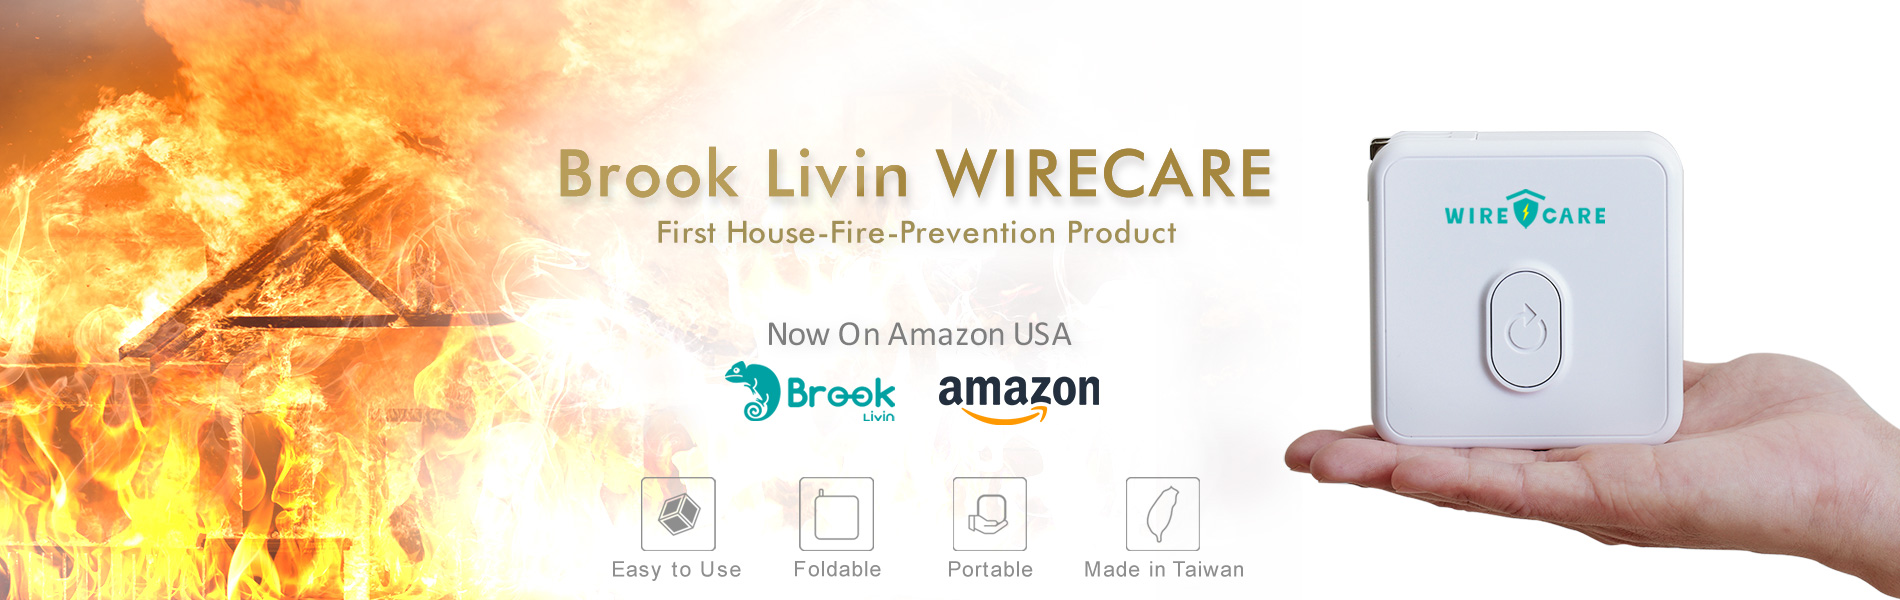 Brook Livin Wirecare hero banner